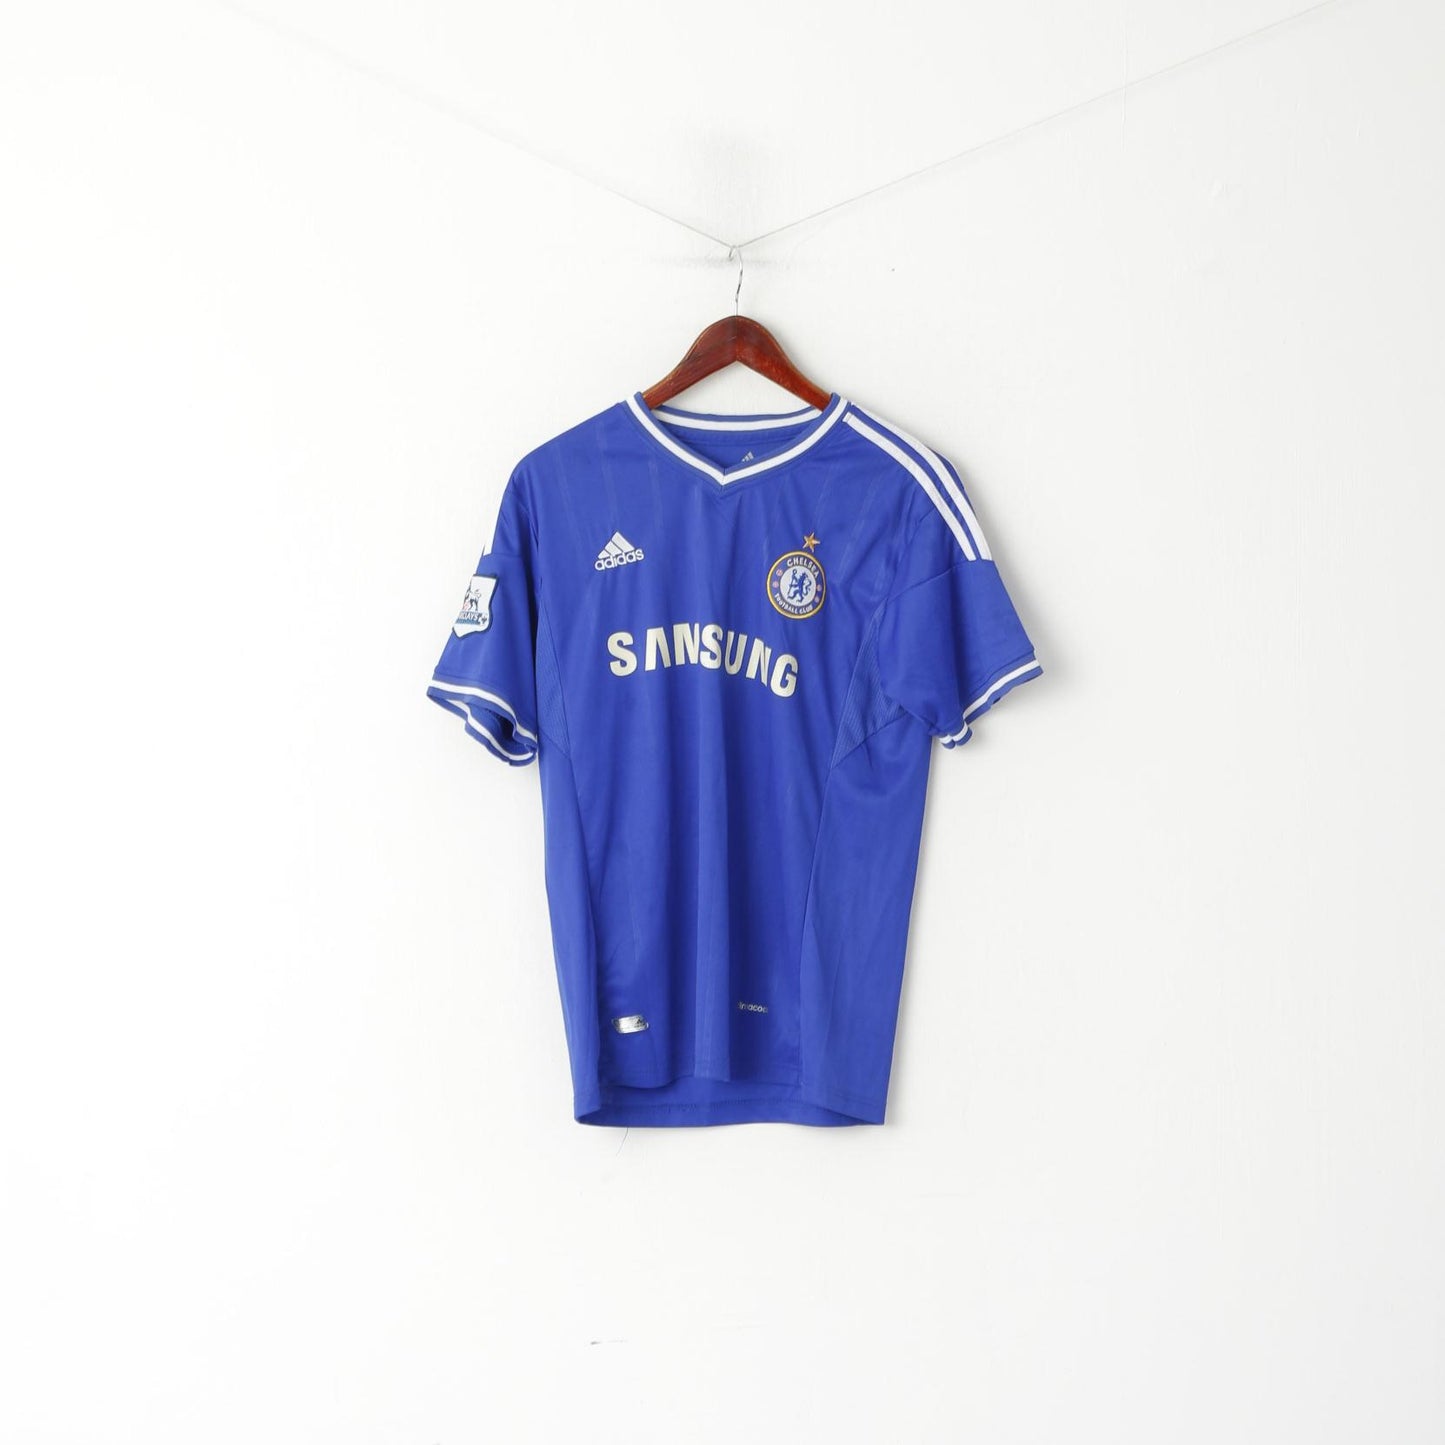 Adidas Hommes L Chemise Bleu Vintage Chelsea Football Club Jersey Torres #9 Haut